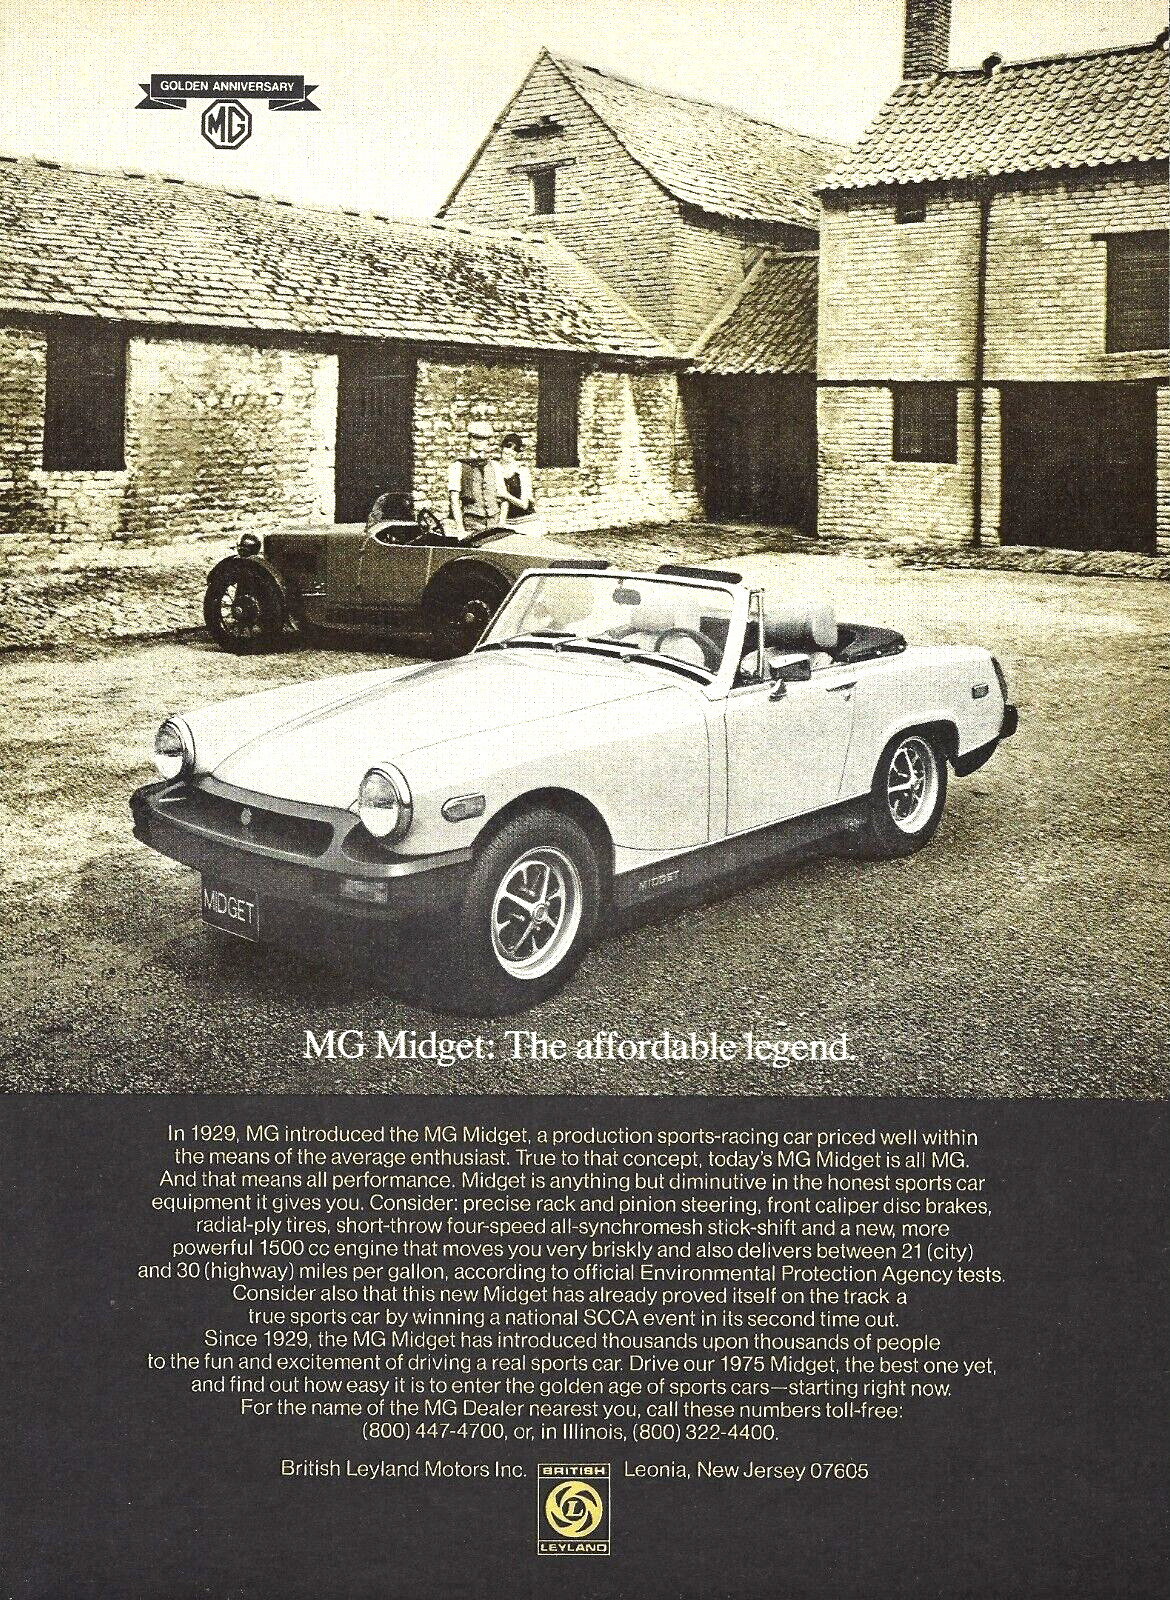 1975 MG Midget British Leyland Sports Car The Affordable Legend vintage Print Ad